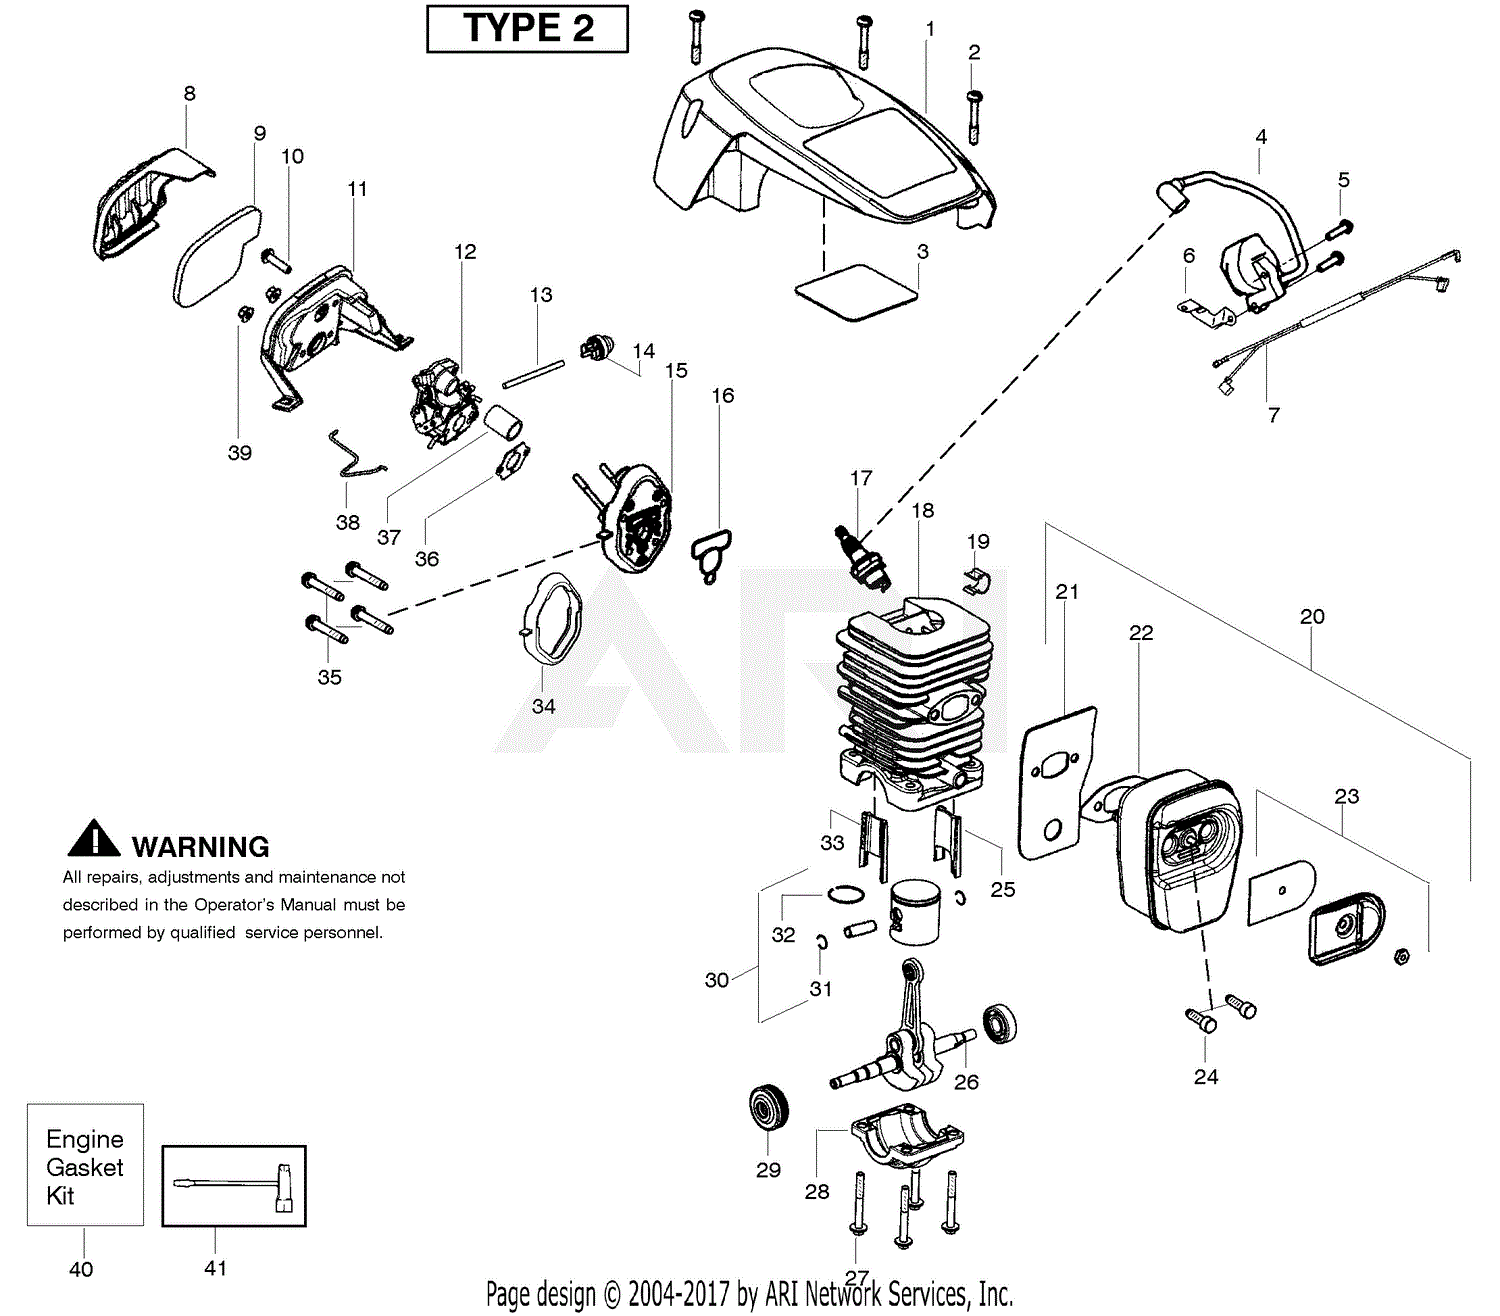 Poulan PP4018 Poulan Pro Gas Saw Type 2 Parts Diagram for Engine Type 2